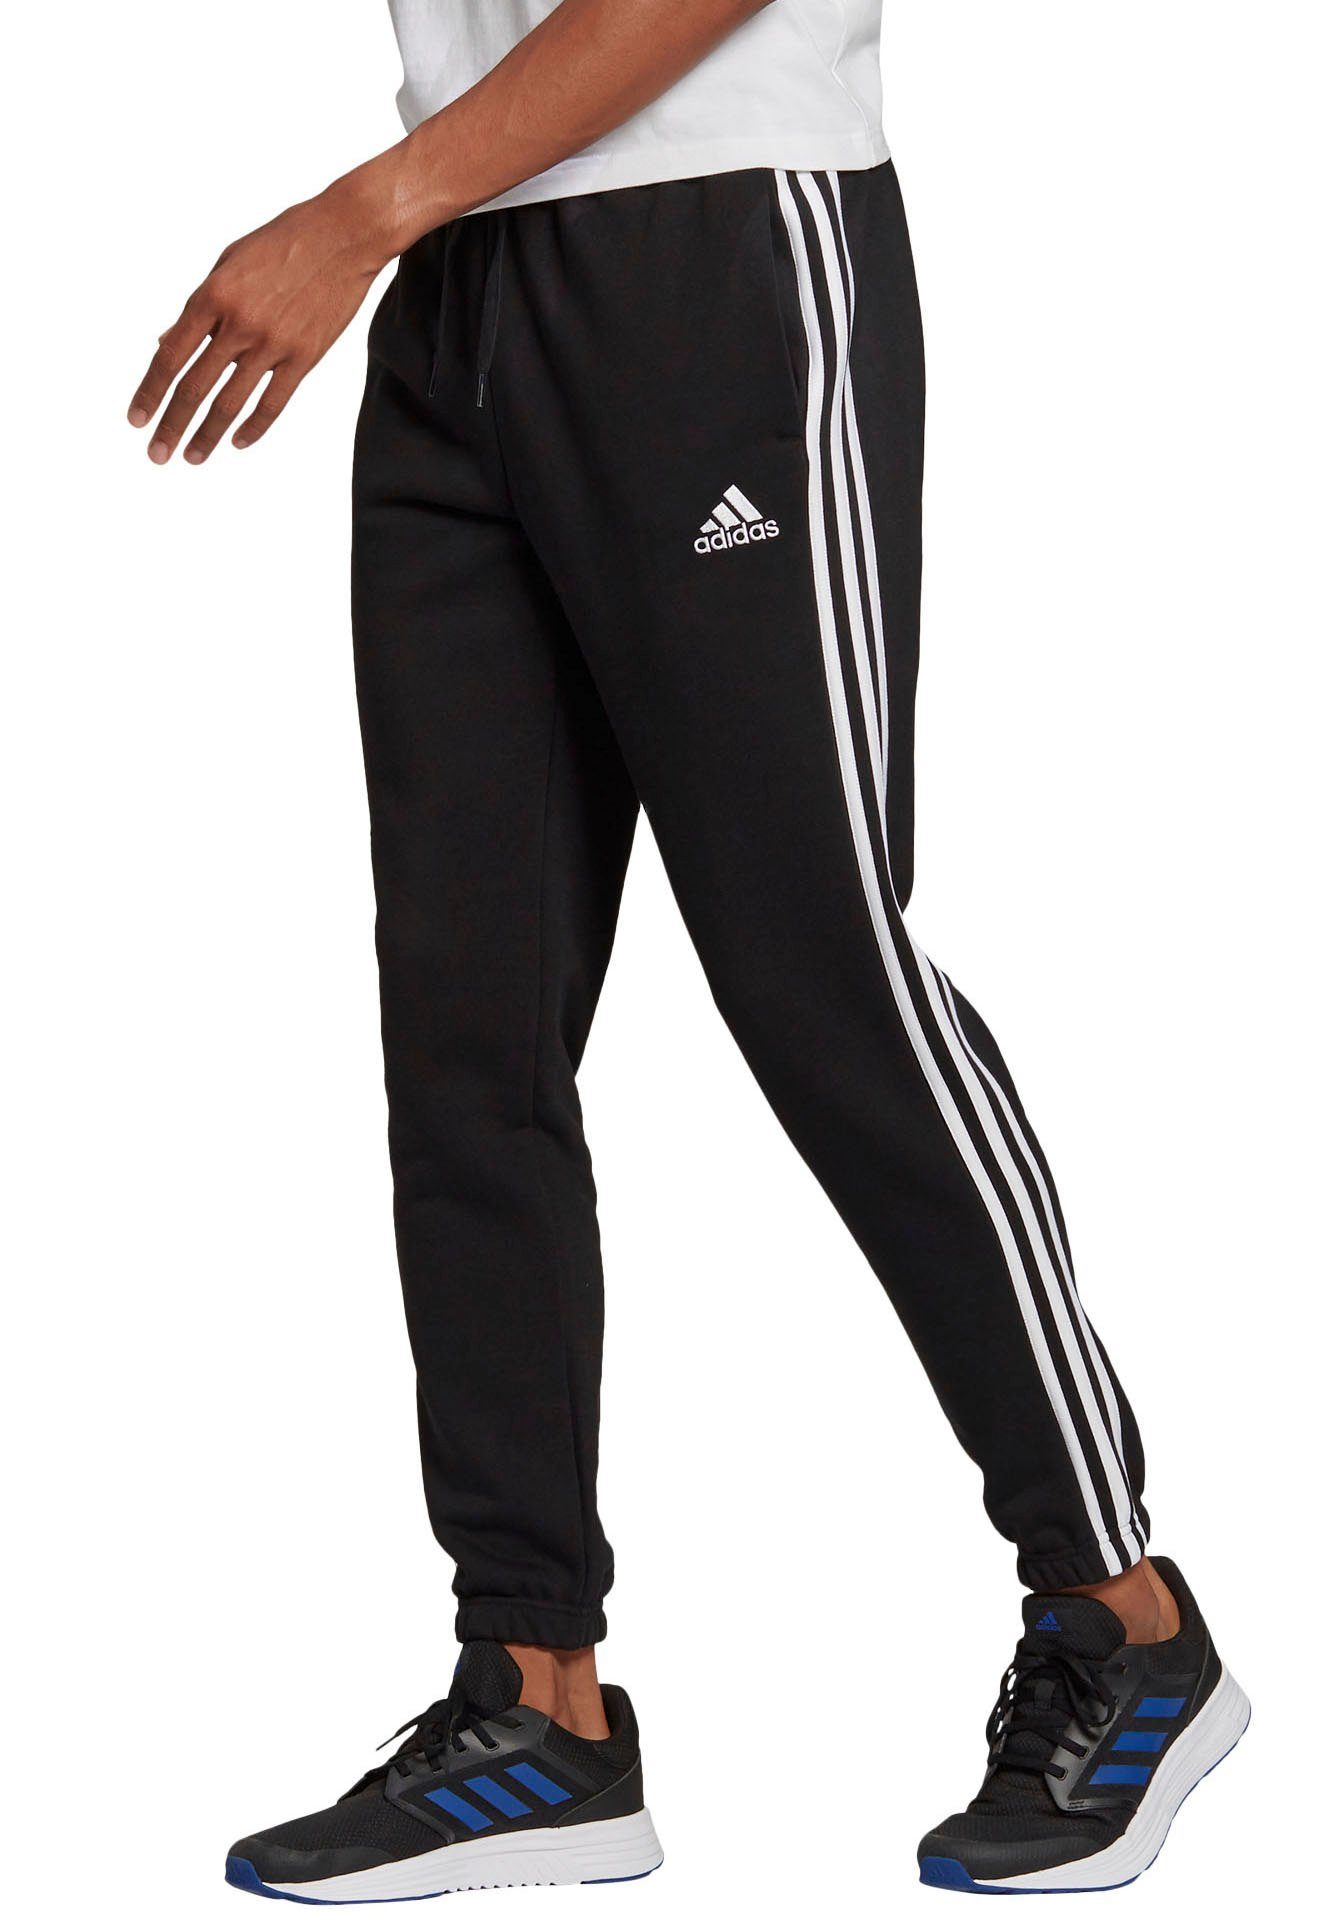 adidas Jogginghosen online kaufen » Sweatpants | OTTO